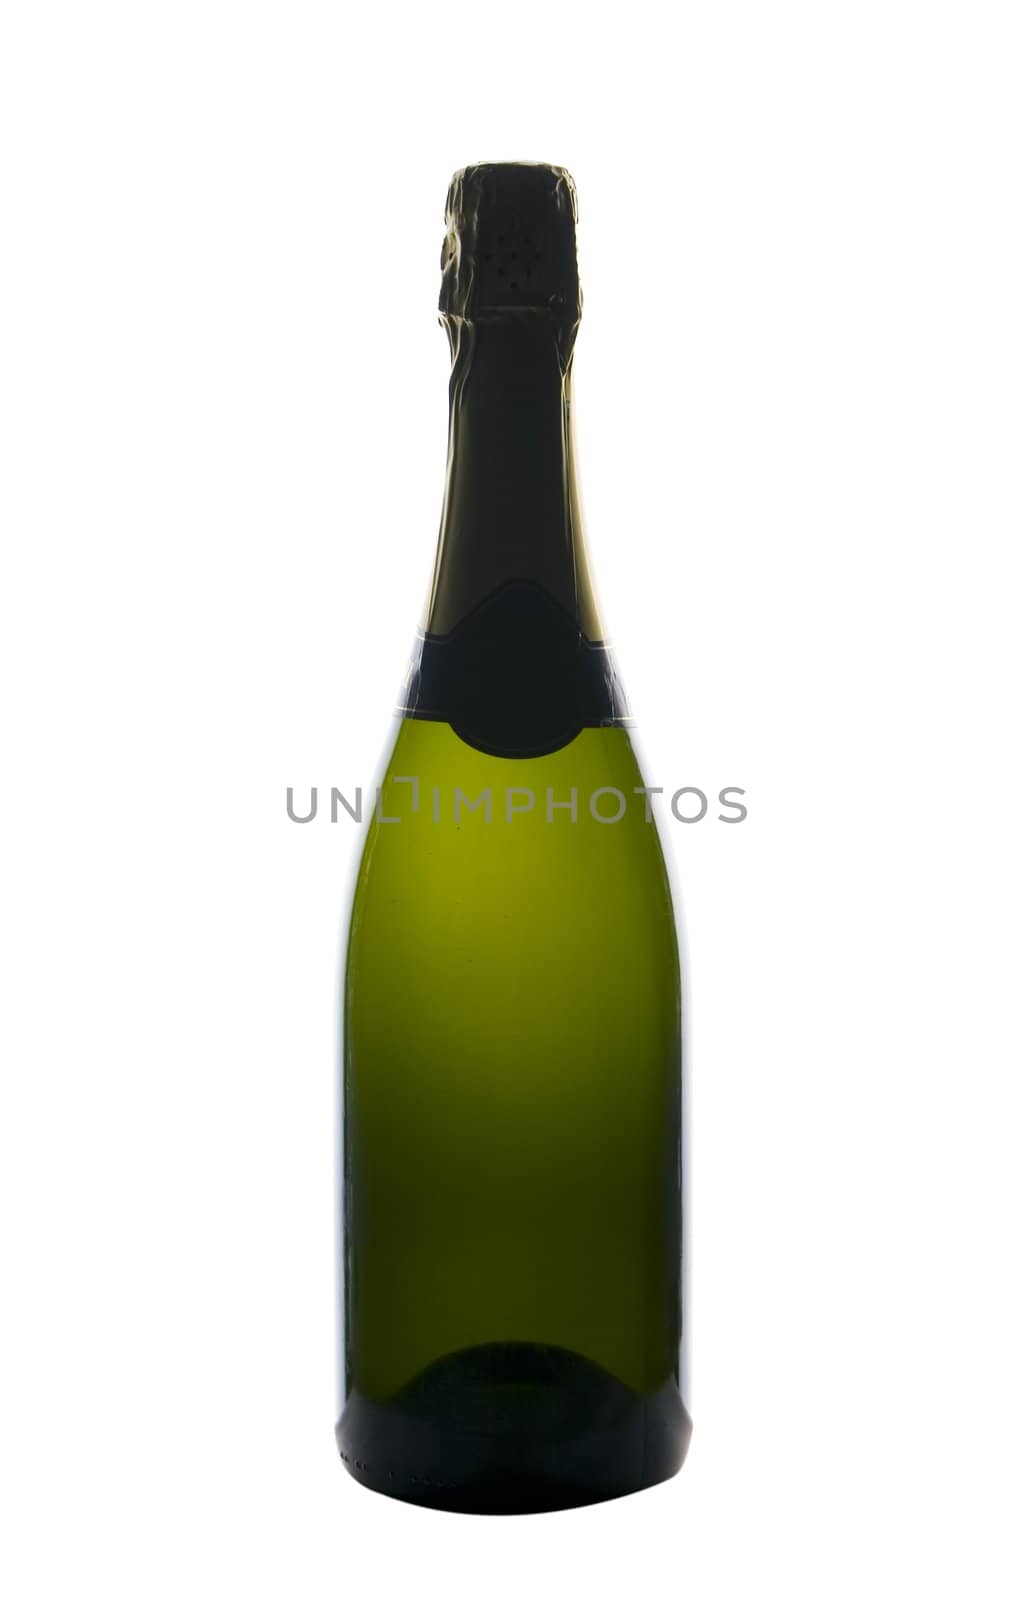 Champagne bottle celebration by Trebuchet